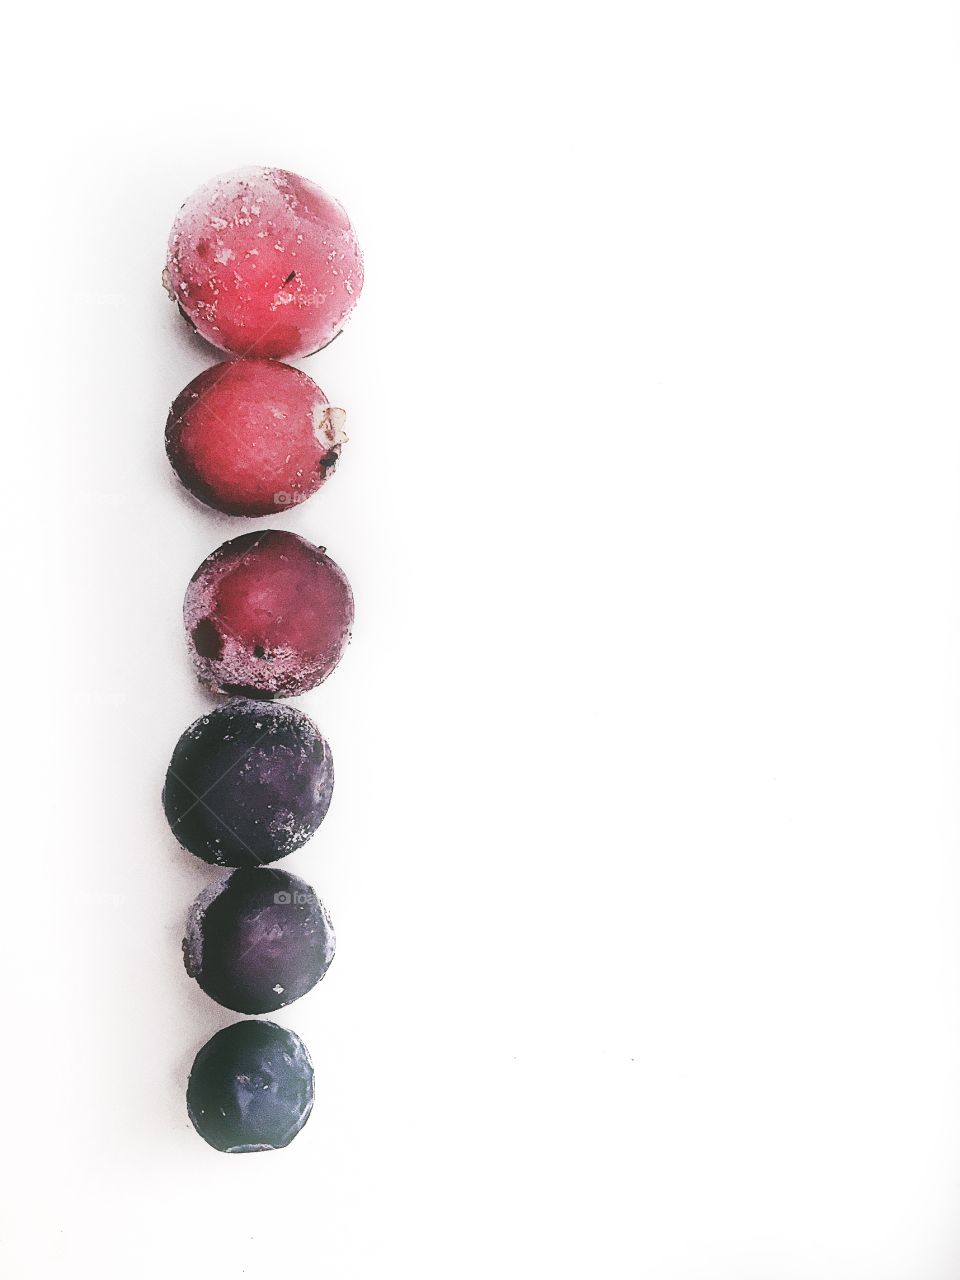 the gradient of cranberries